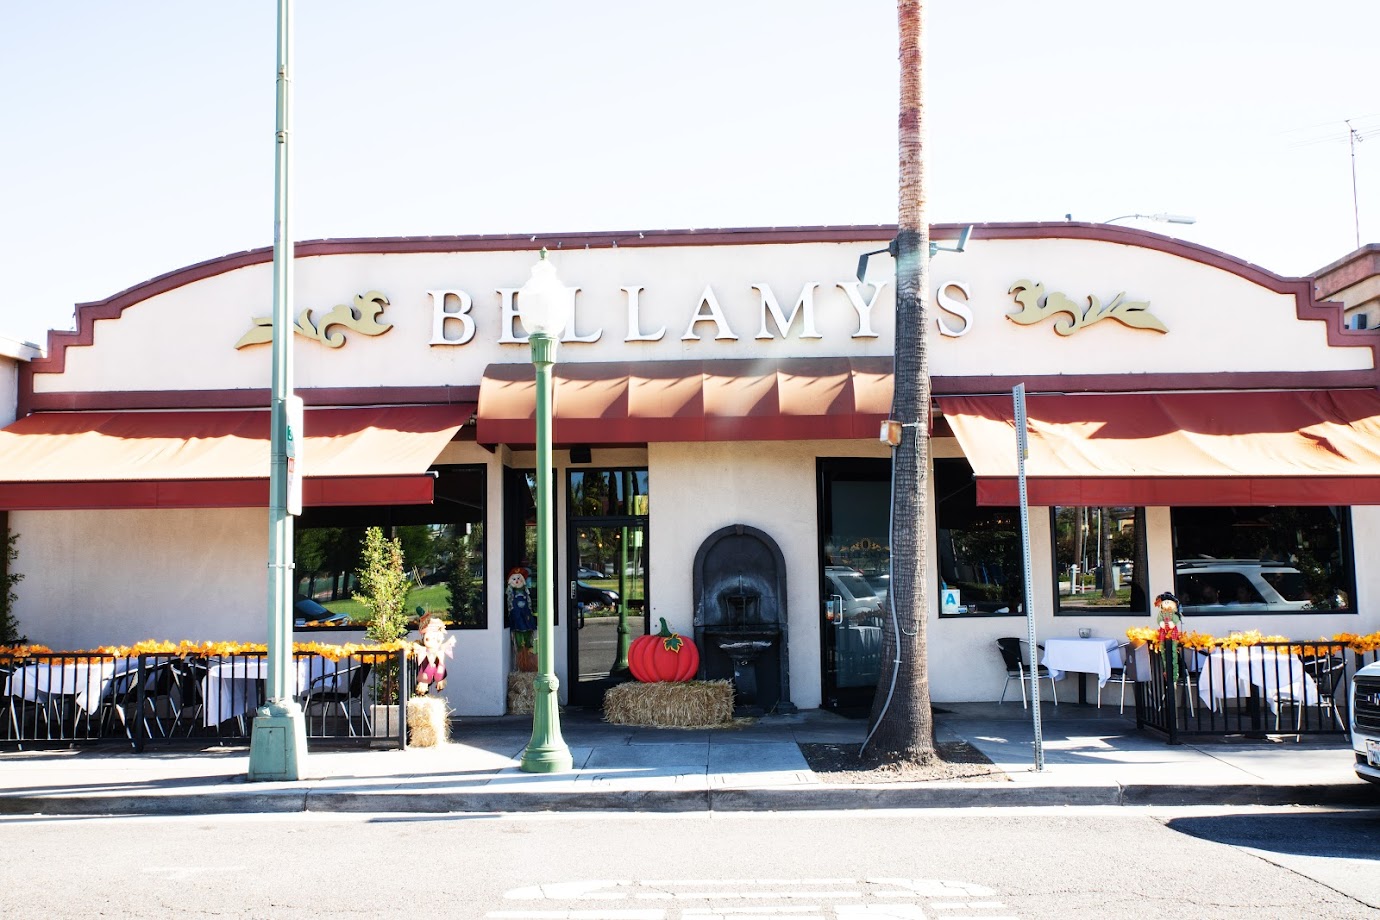 Bellamy's Restaurant